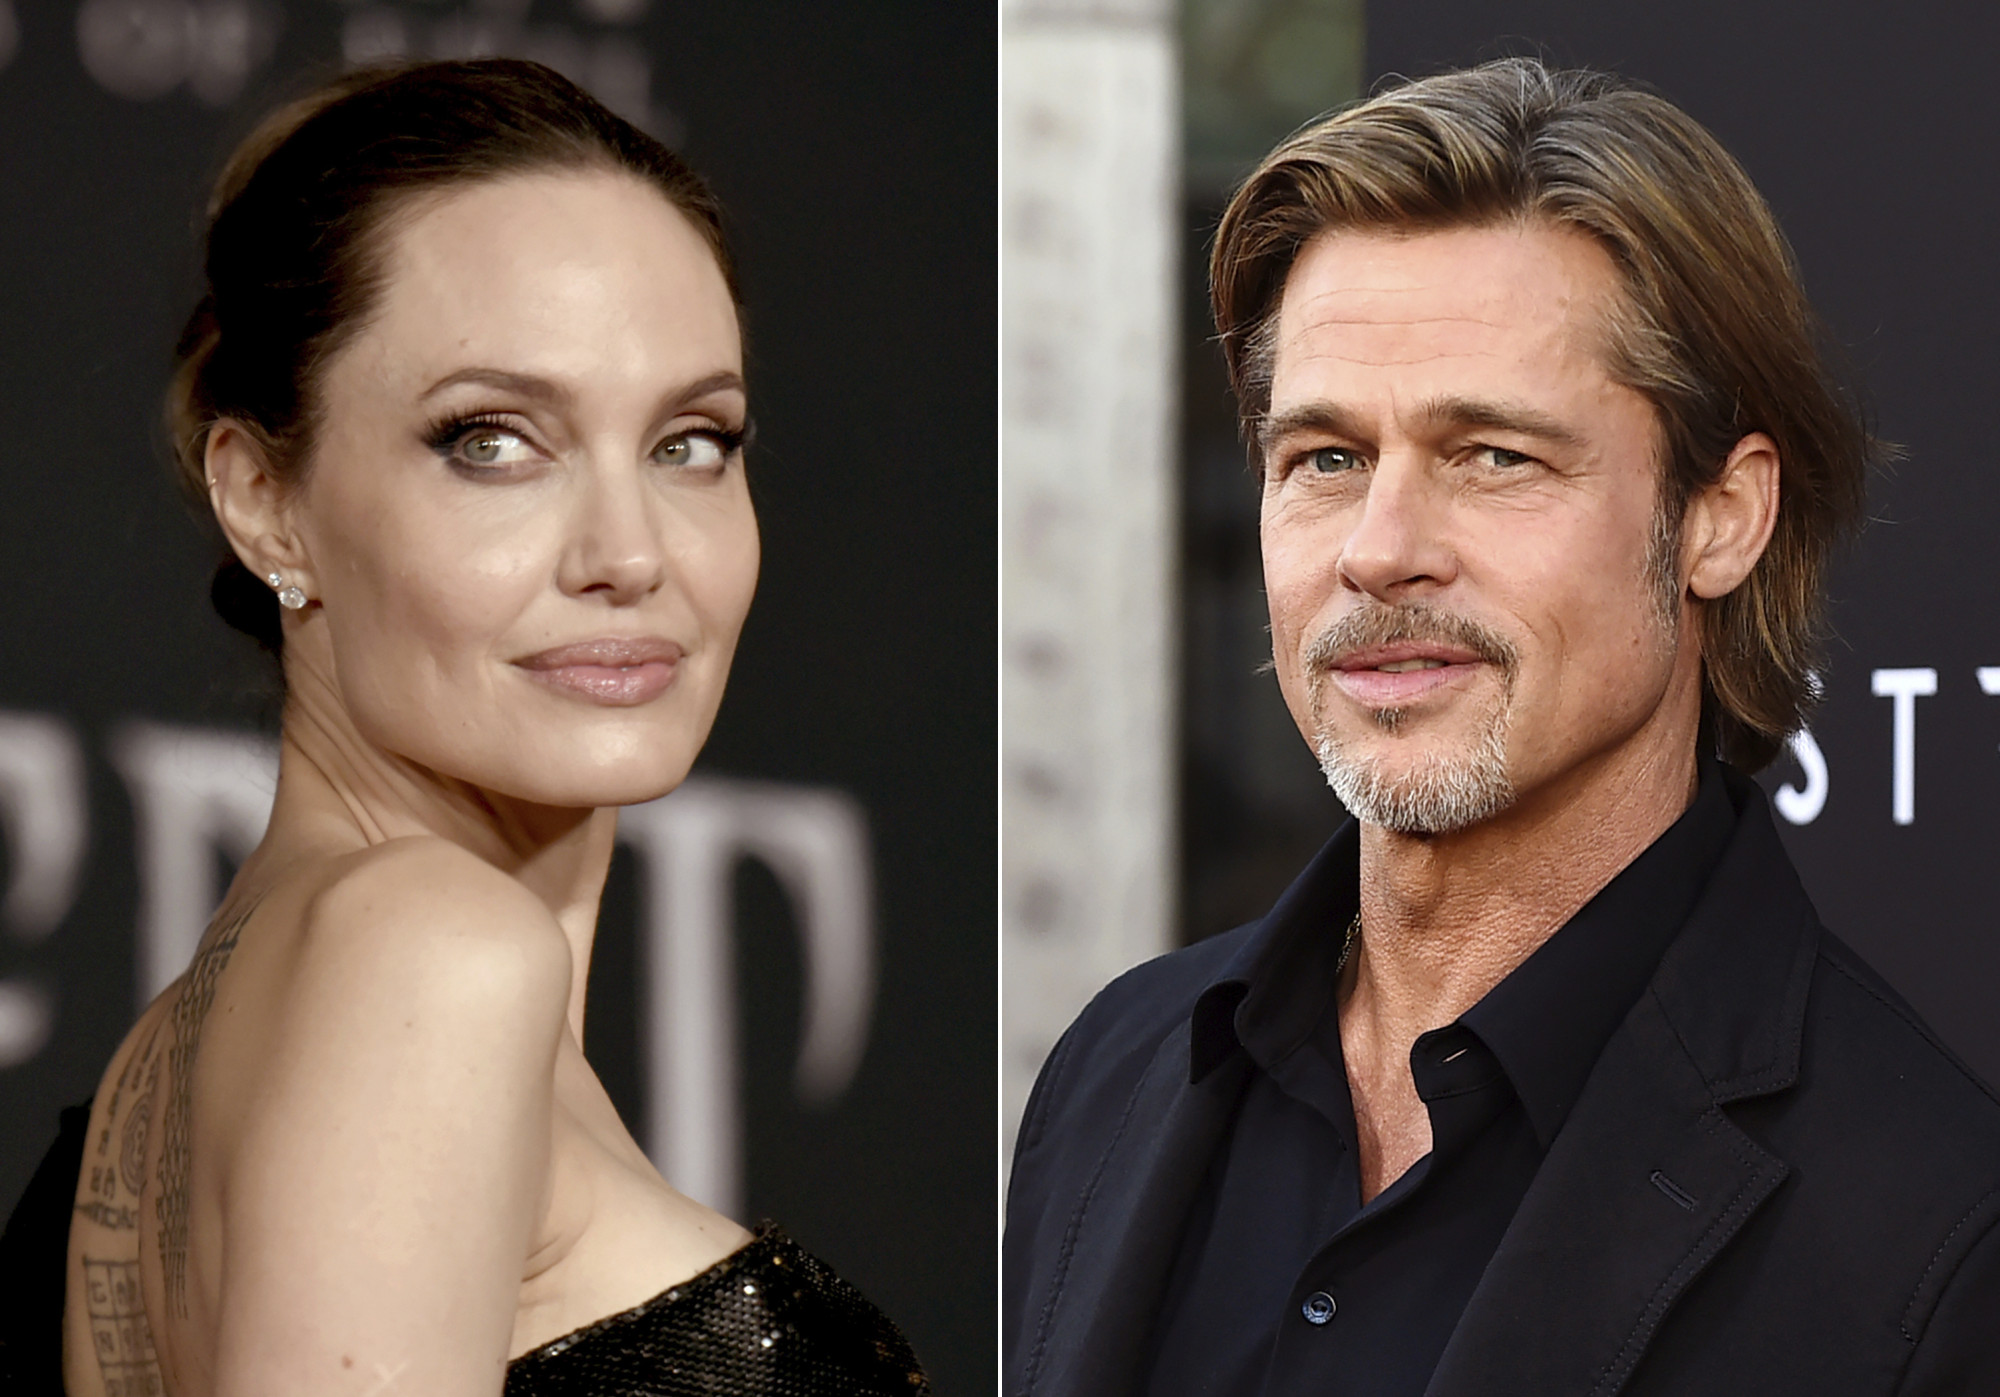 Angelina Jolie Seeks Removal of Private Judge in Divorce Case